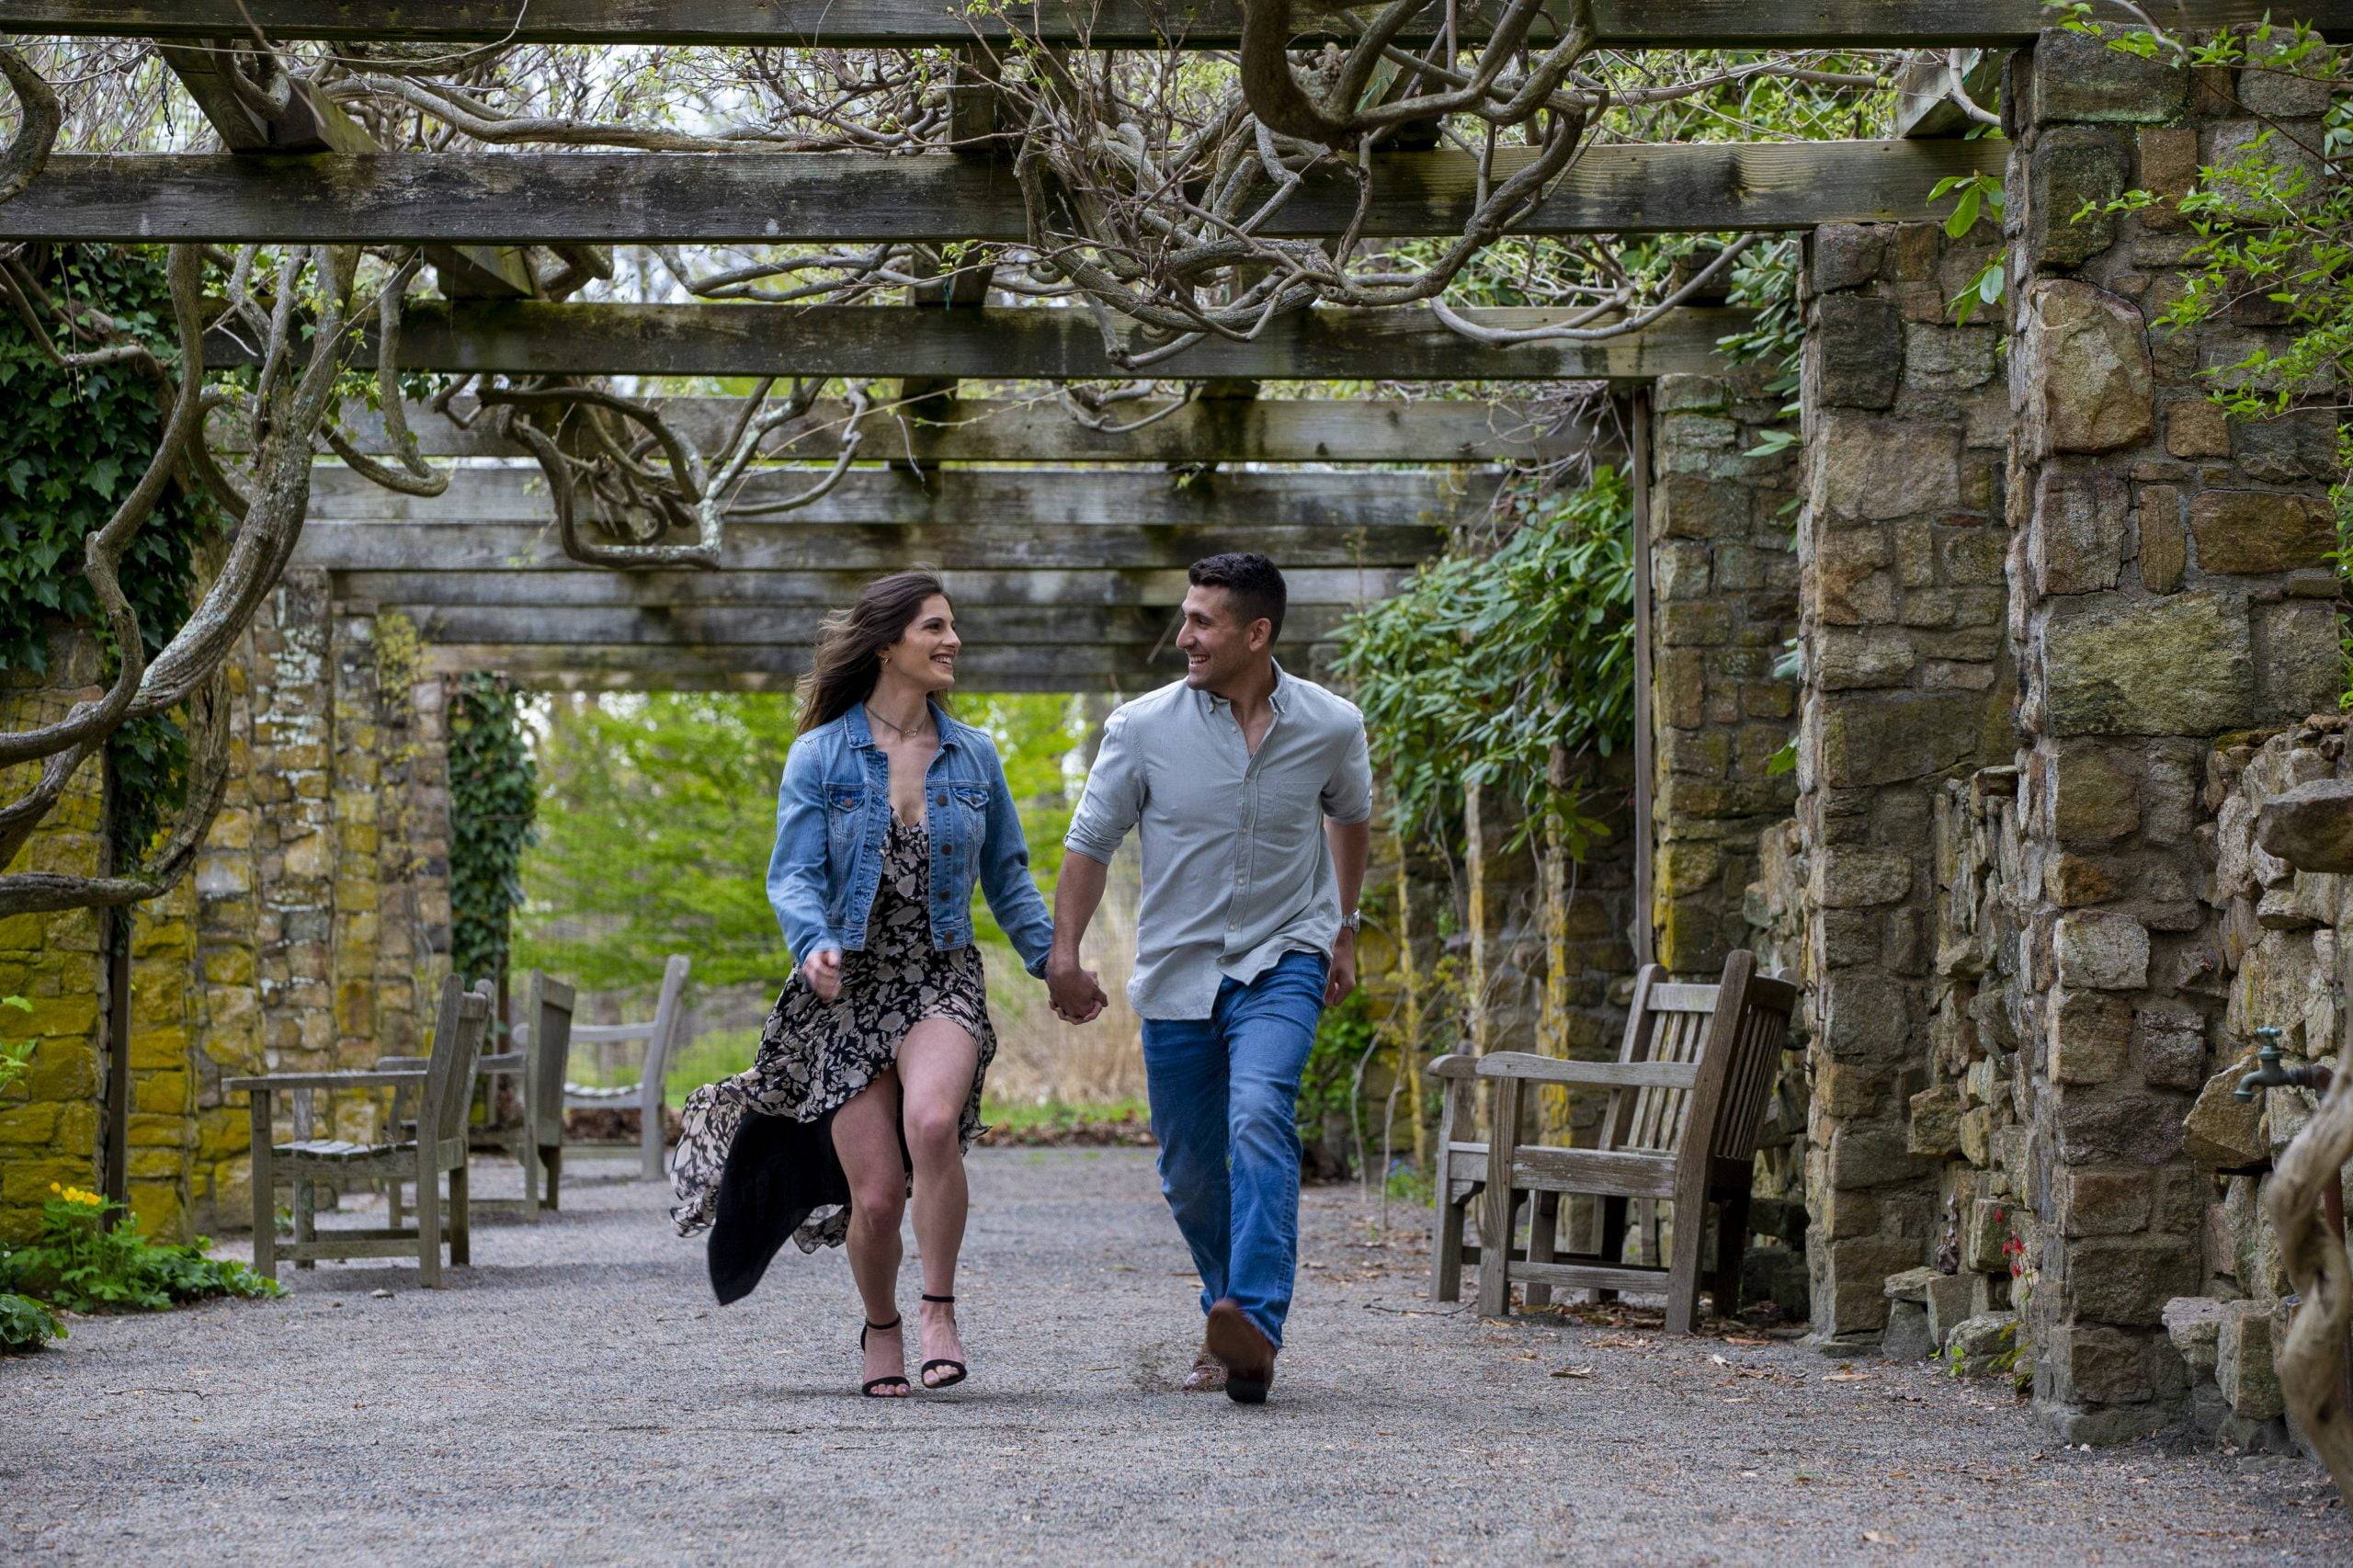 An engaged couple walking through an arboretum.